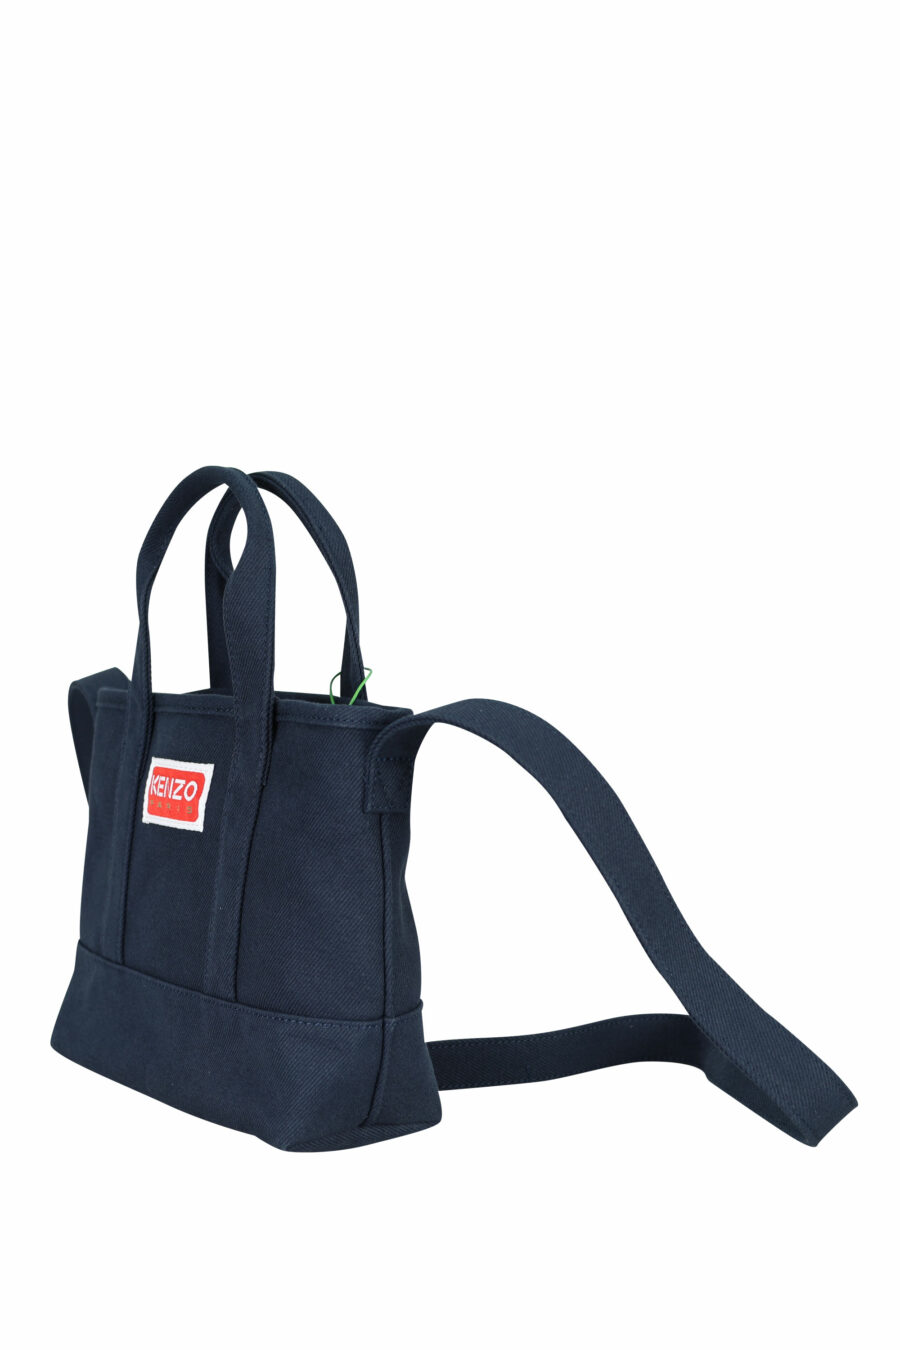 Tote bag mini bandolera azul oscuro con maxilogo "boke flower" - 3612230581357 1